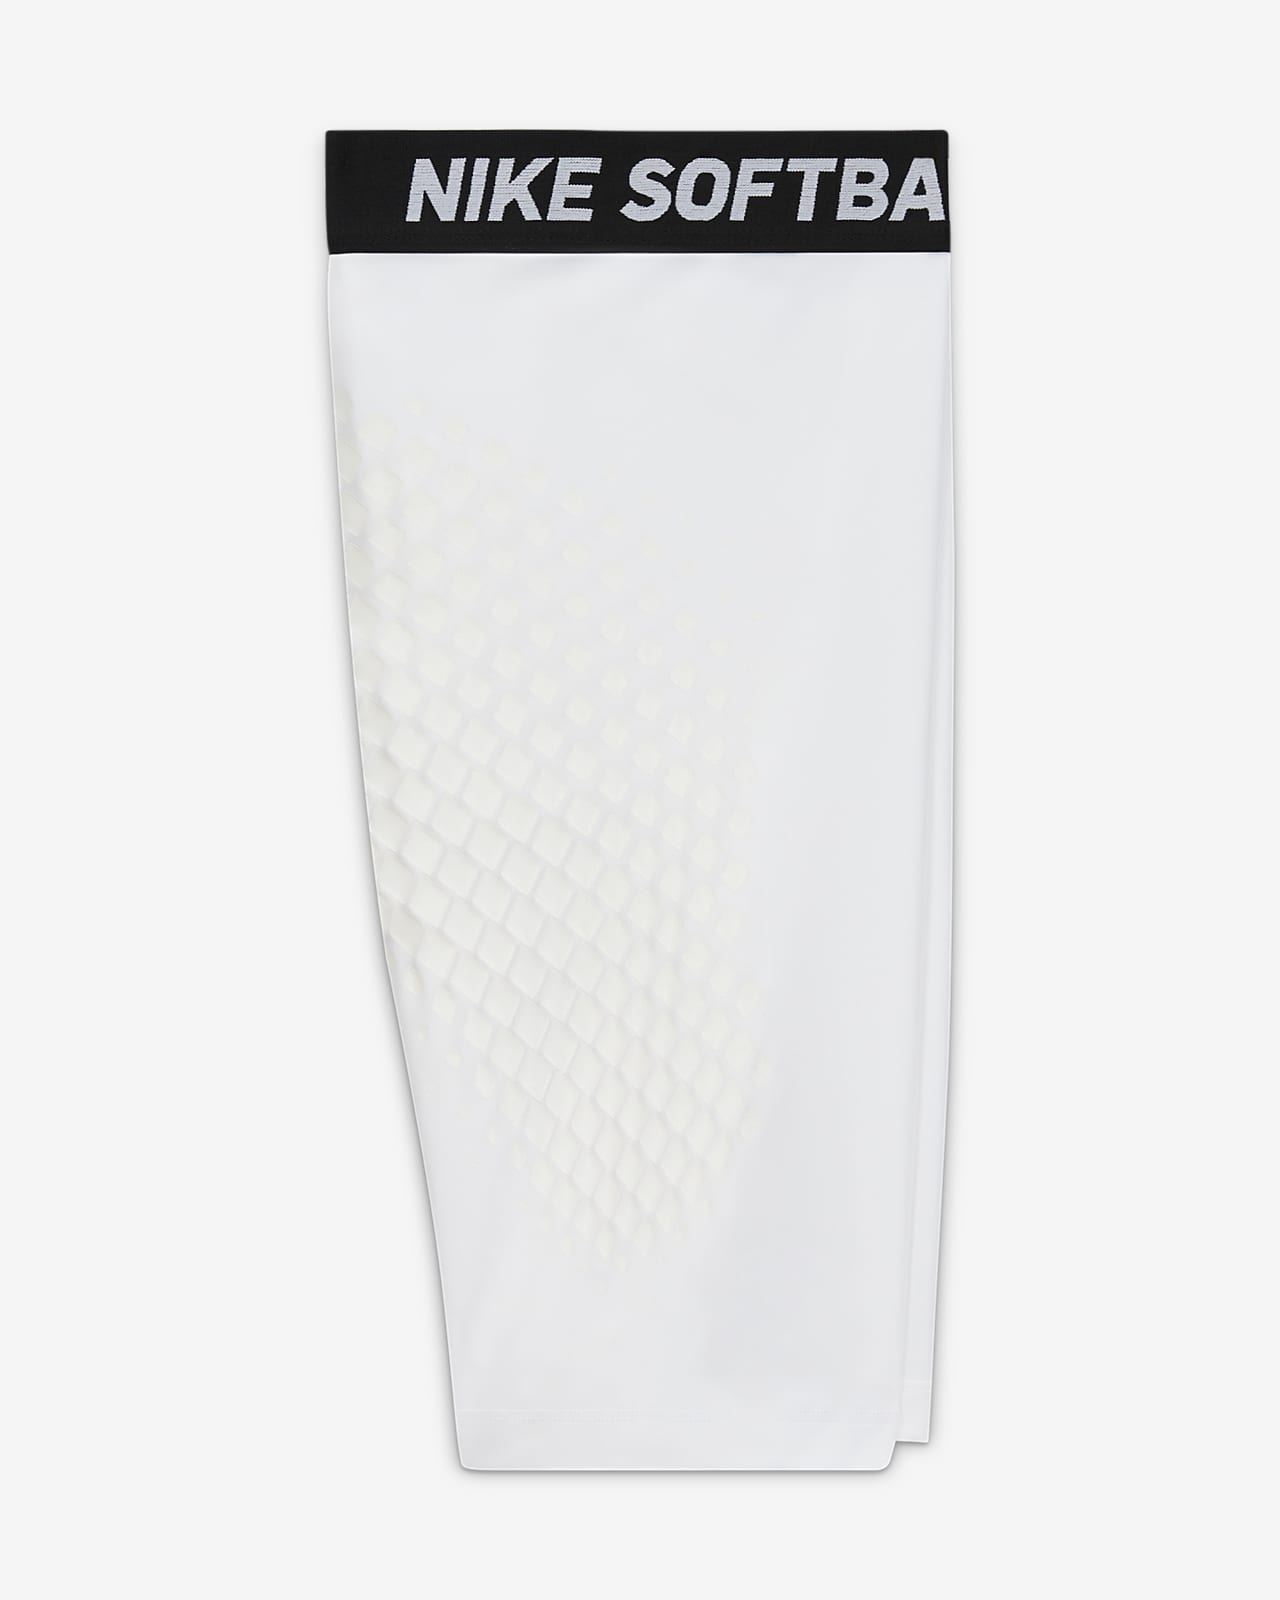 Nike Women's Slider Softball Shorts. Nike.com